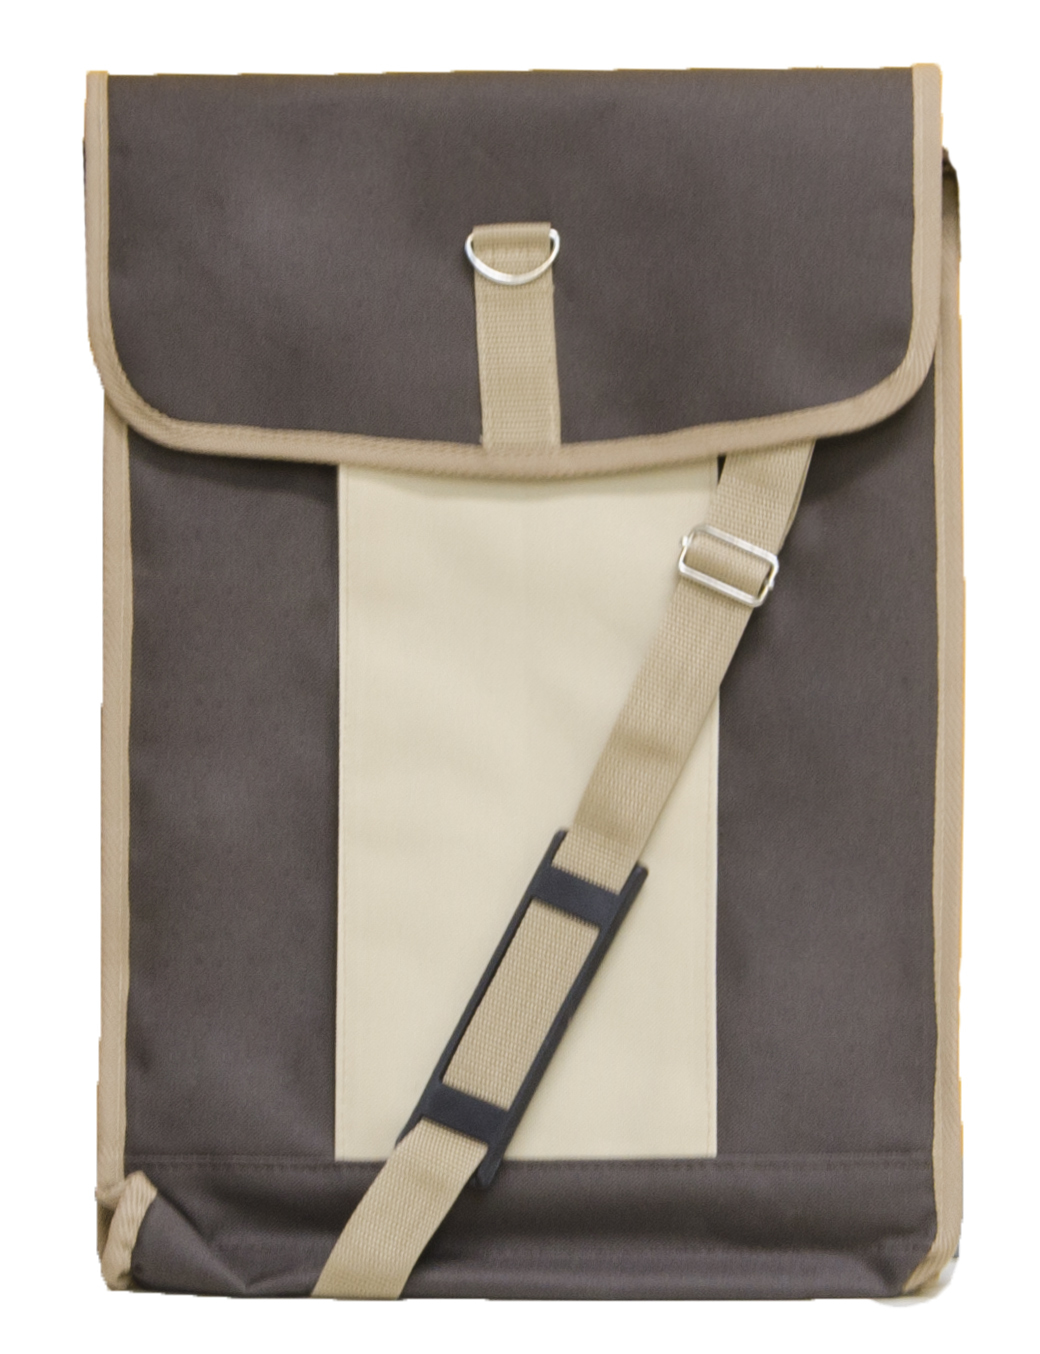 Сумка для планшета 42х30 (жест.) коричневая с бежевым карманом сумка для планшета 42х30 жест коричневая с бежевым карманом